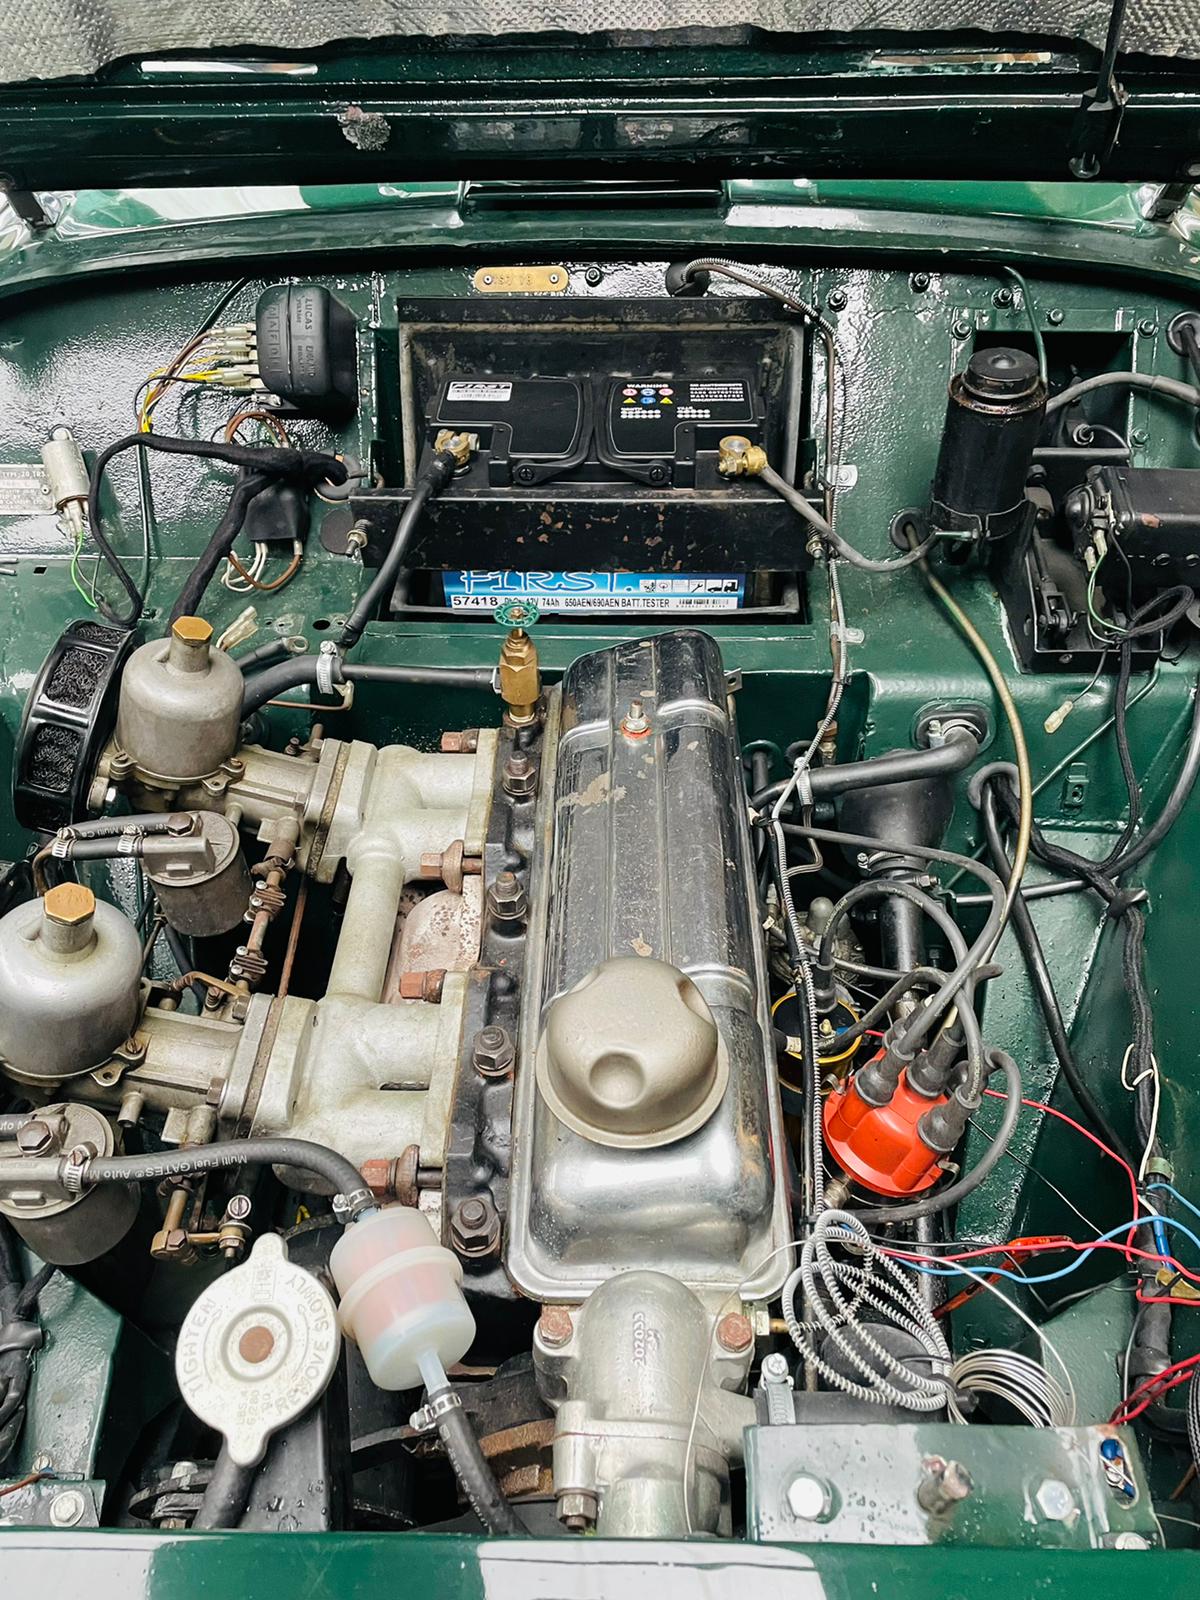 Triumph TR3 B – 1962